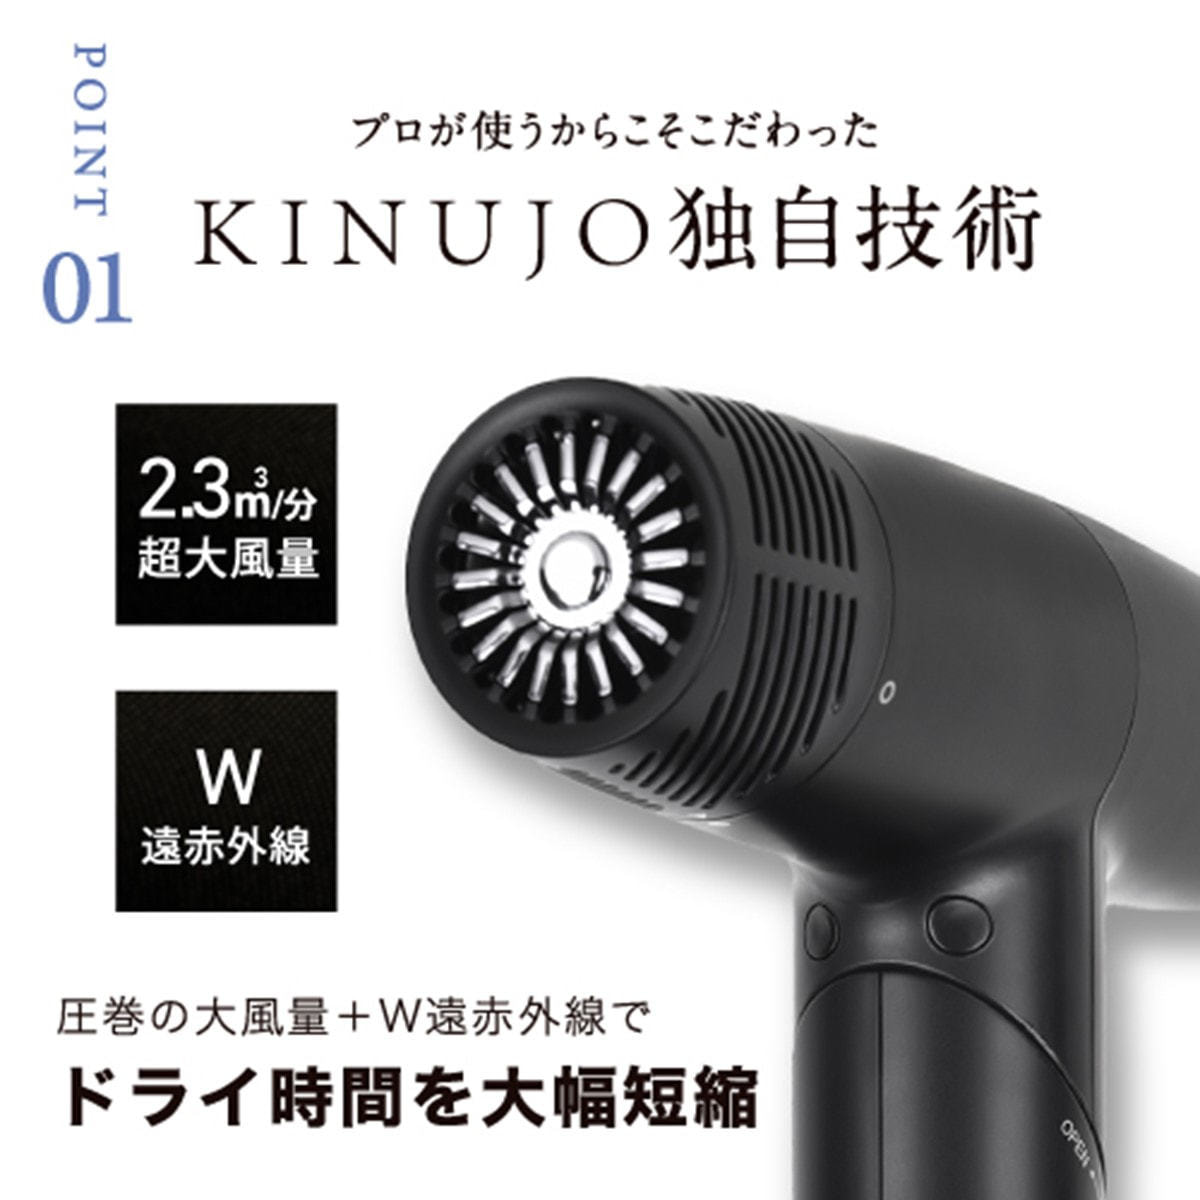 KINUJO PRO Dryer キヌージョプロヘアドライヤーKP101（1350W 